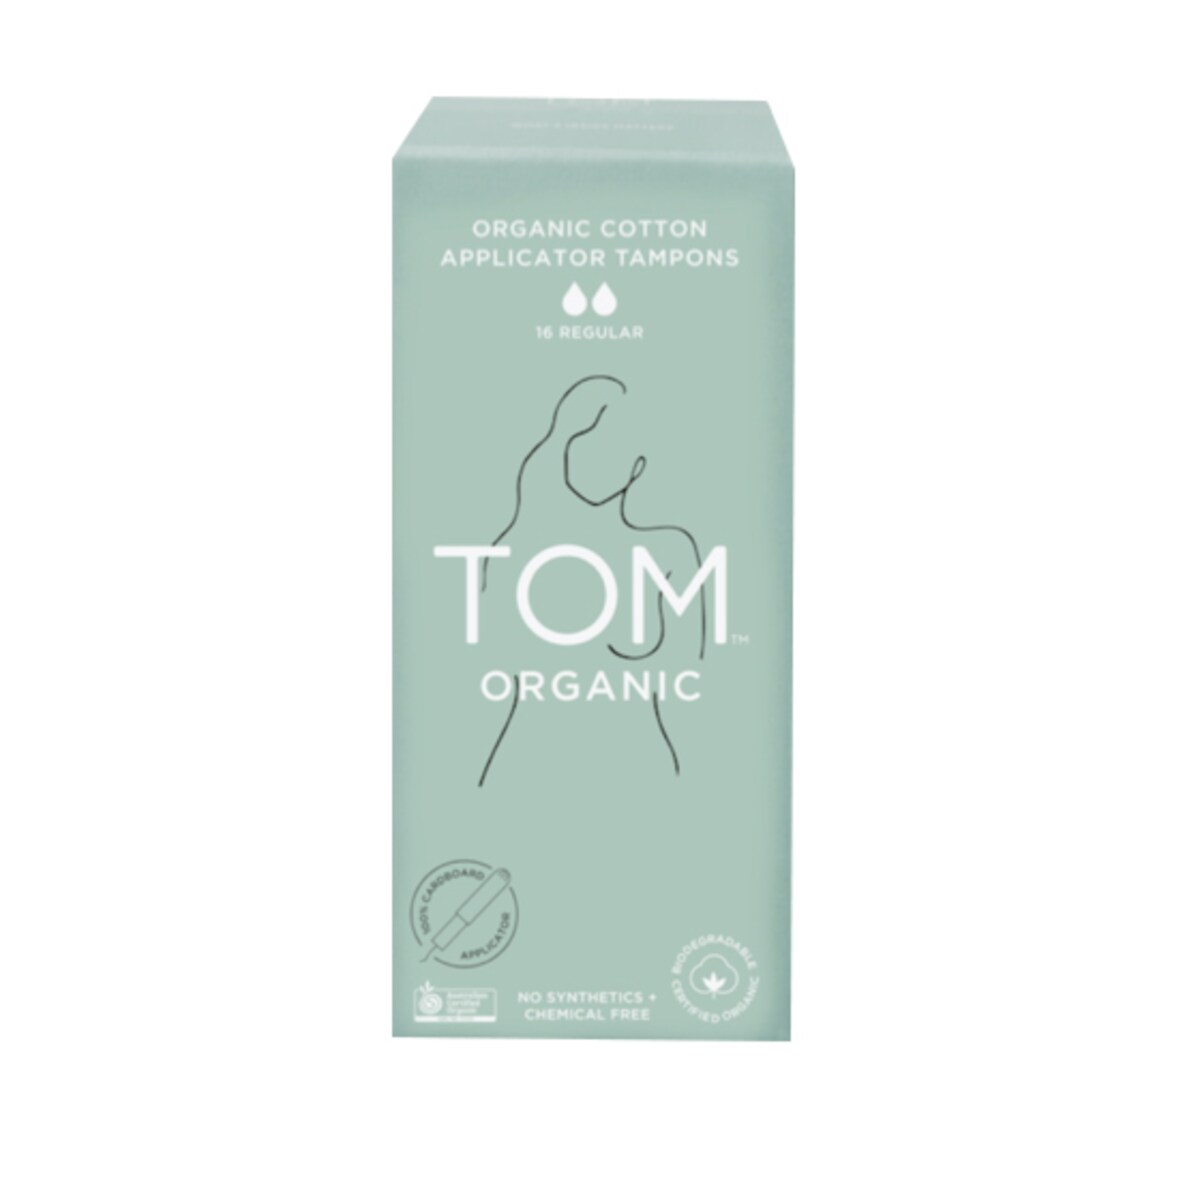 Tom Organic Organic Applicator Tampons 16 Regular Tampons